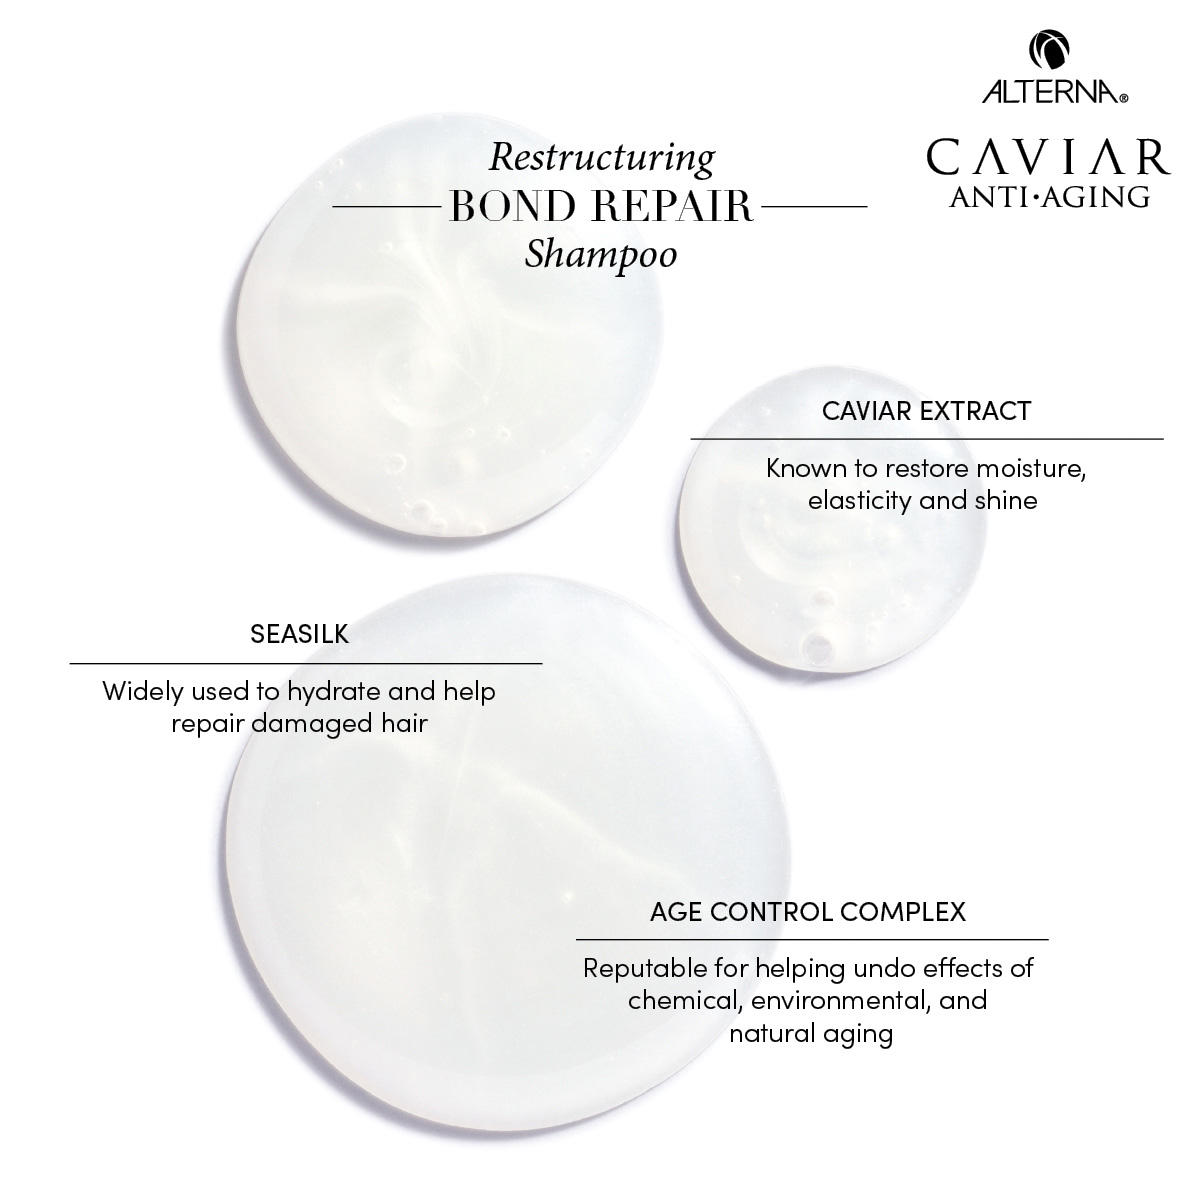 Alterna Caviar Anti-Aging Restructuring Bond Repair Shampooing 250 ml - 4